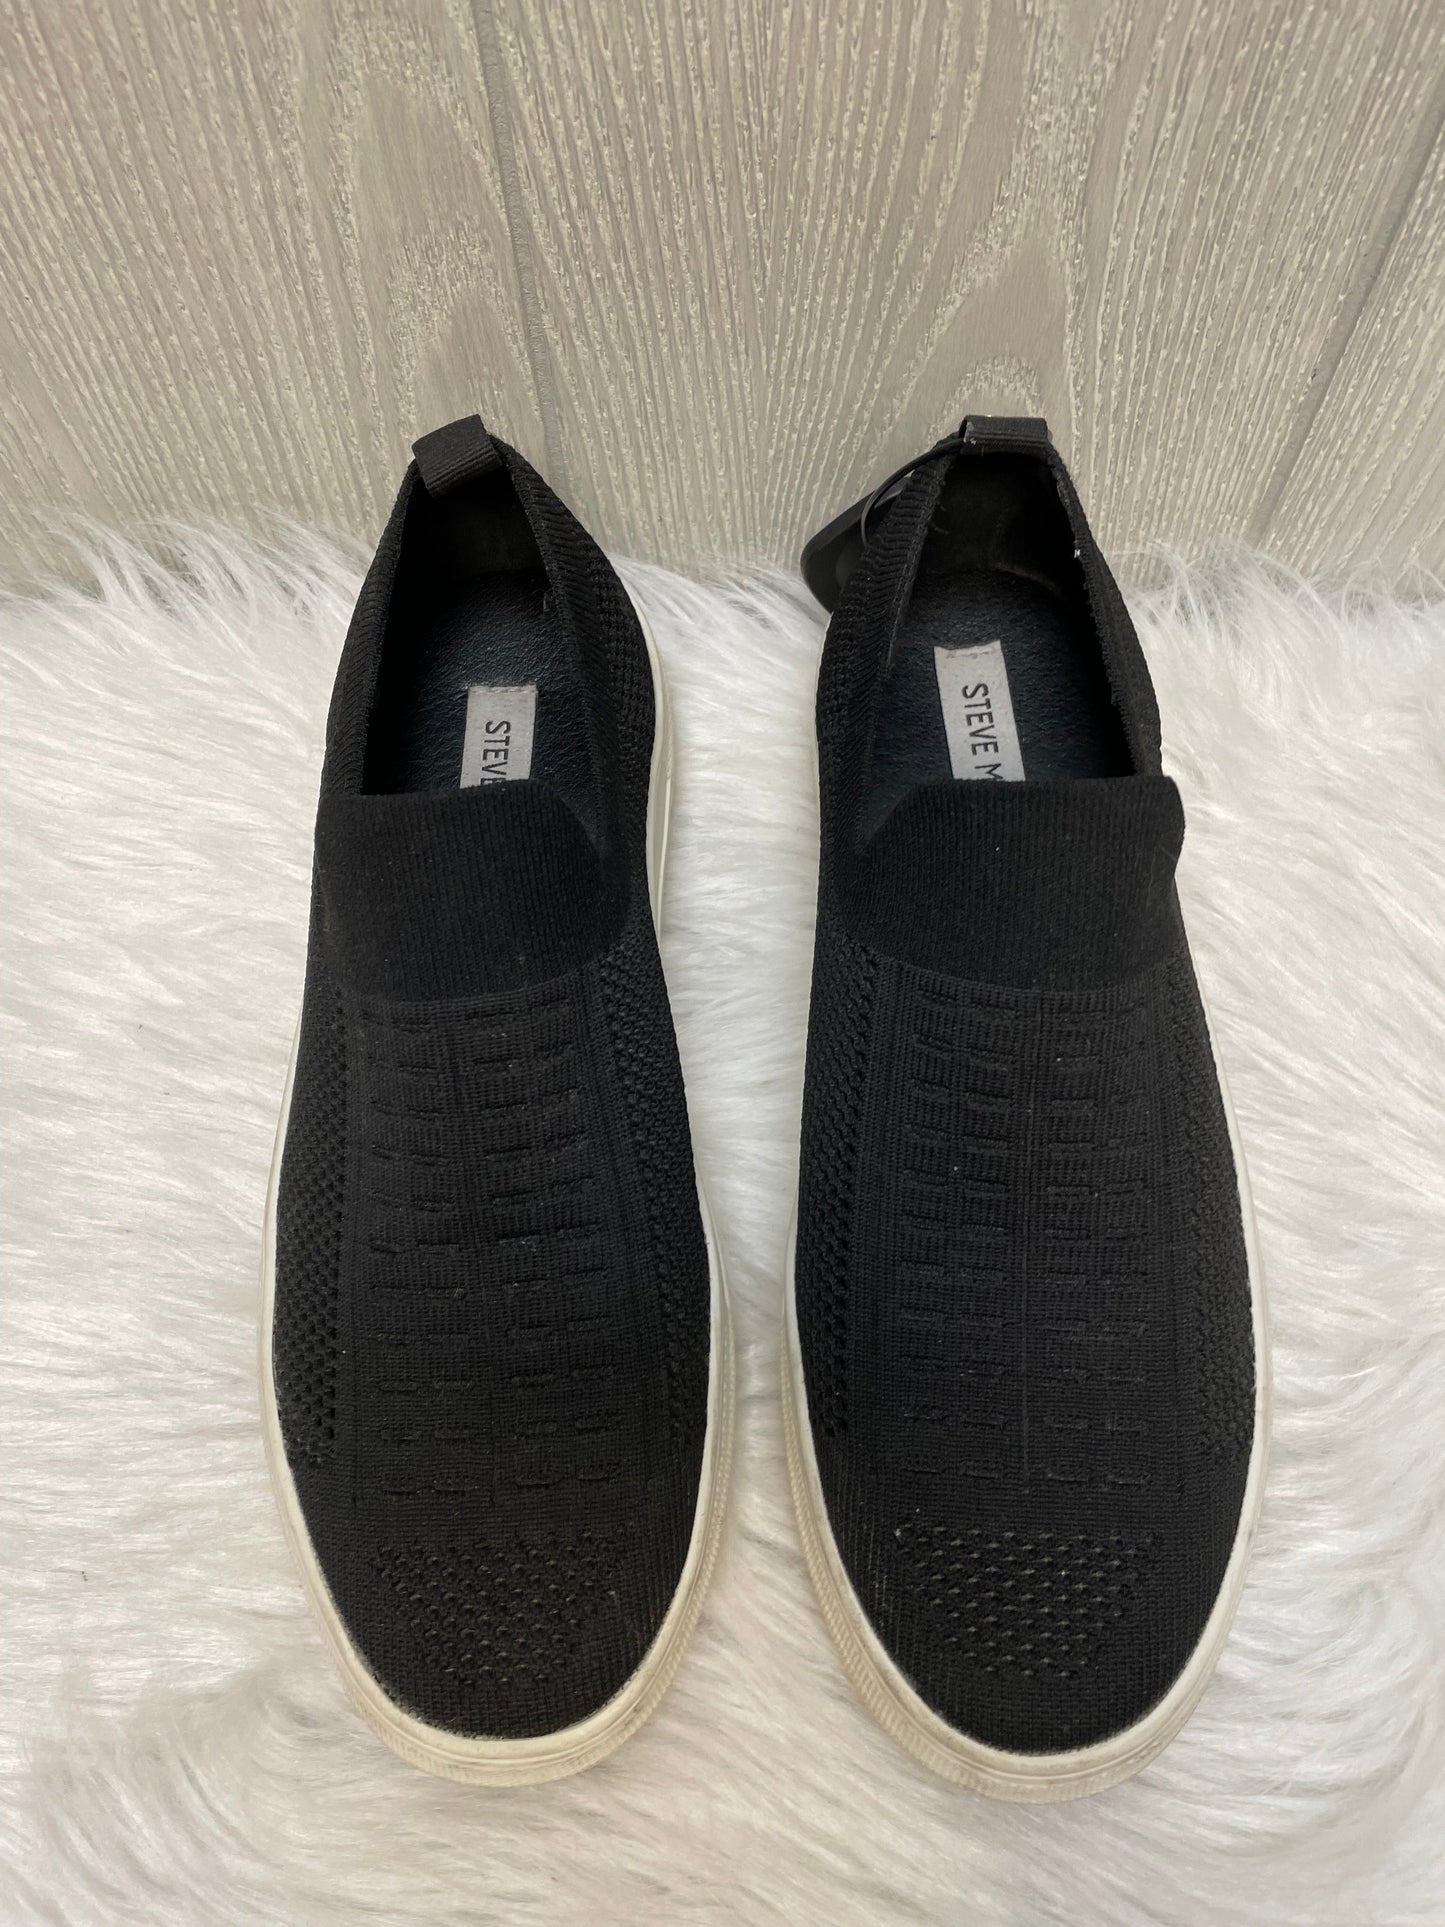 Black Shoes Flats Steve Madden, Size 9